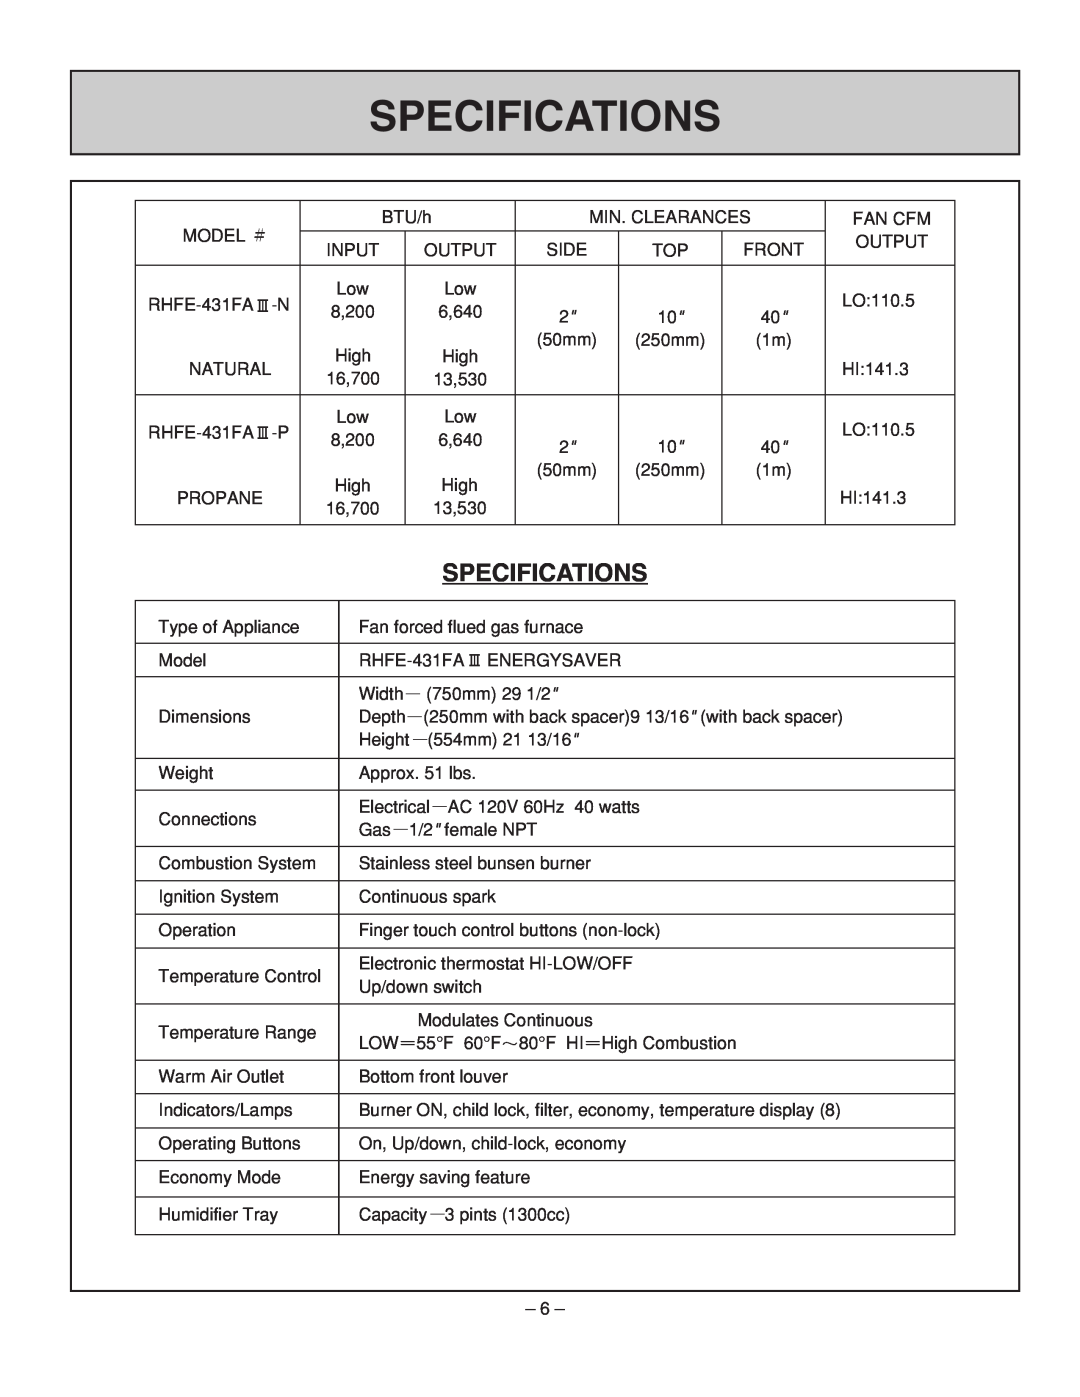 Rinnai RHFE-431FA installation manual Specifications 